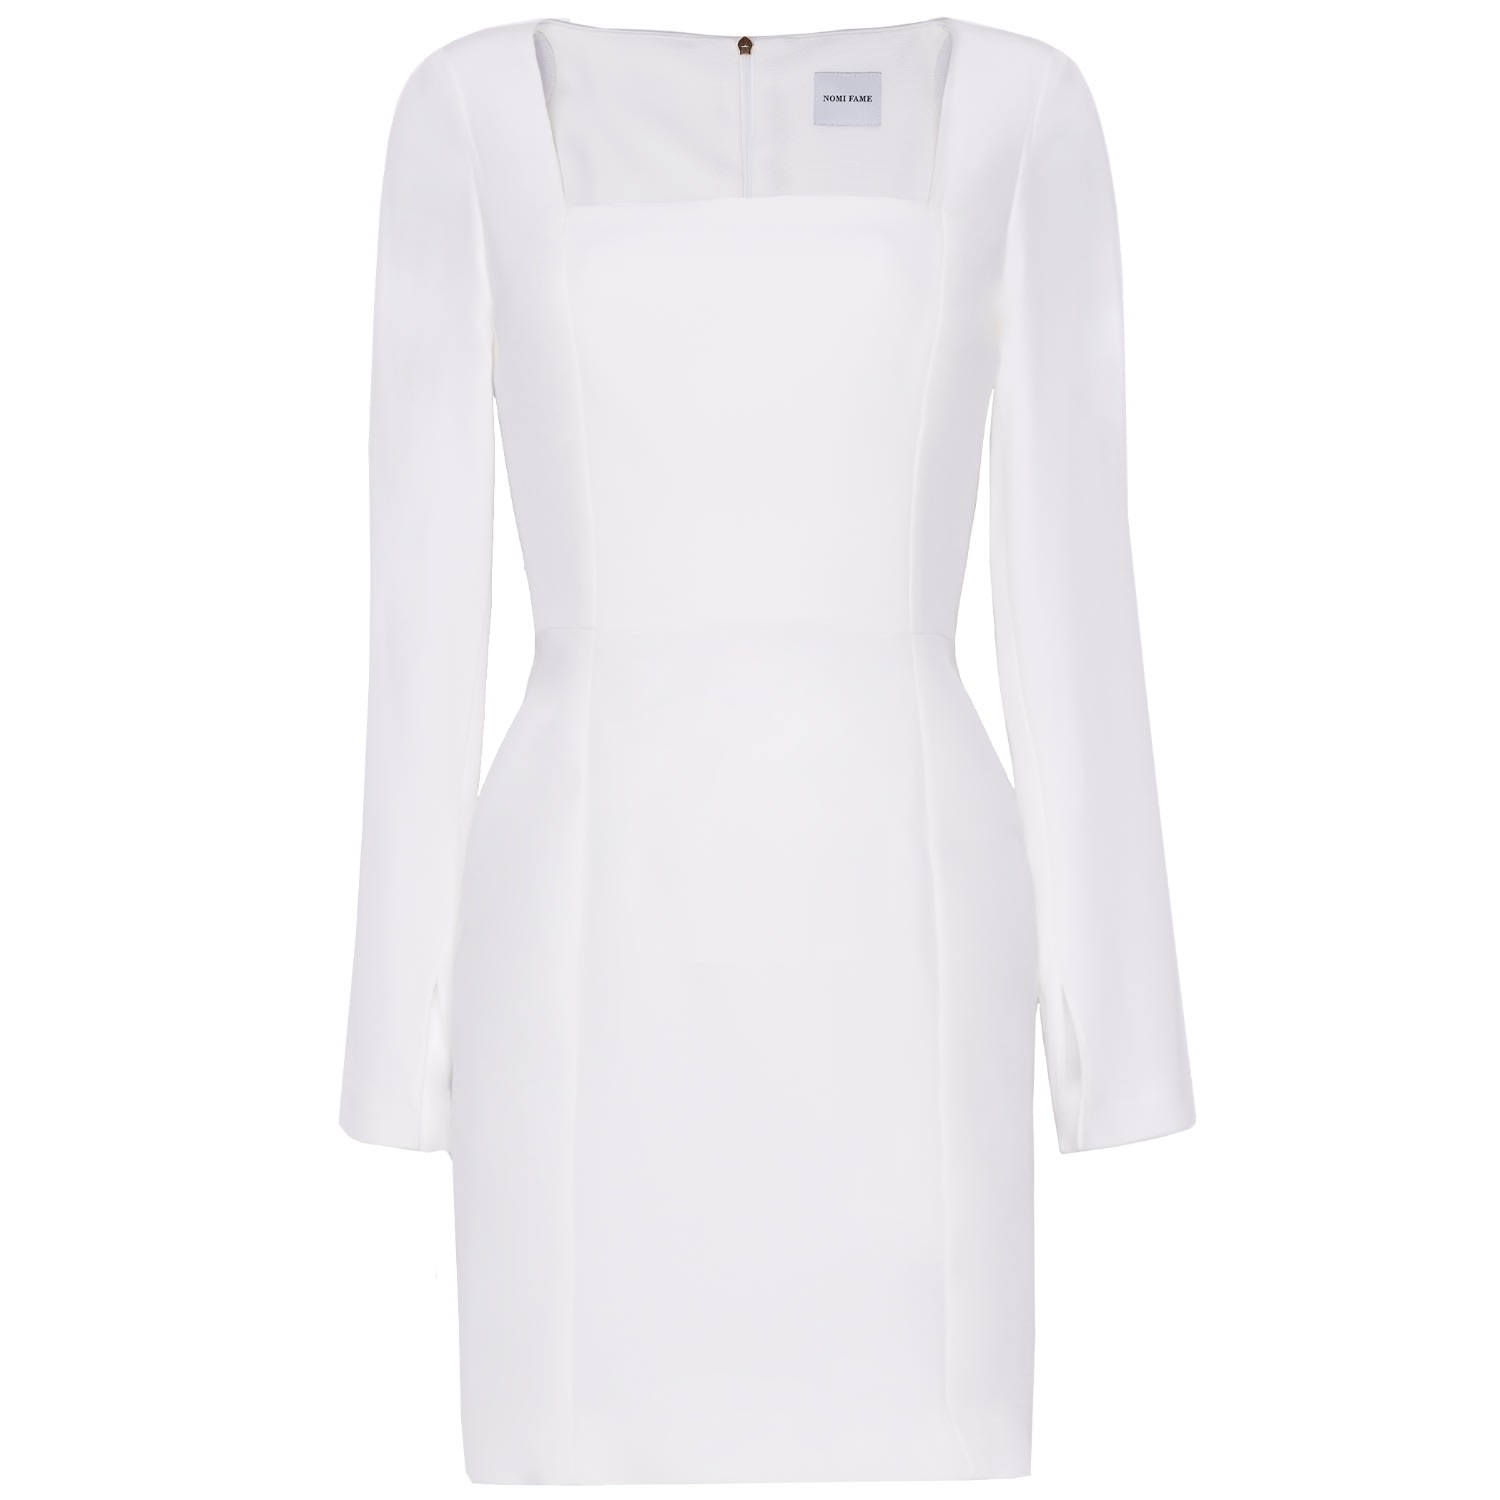 Shop Nomi Fame Women's Ori White Long Sleeve Mini Dress